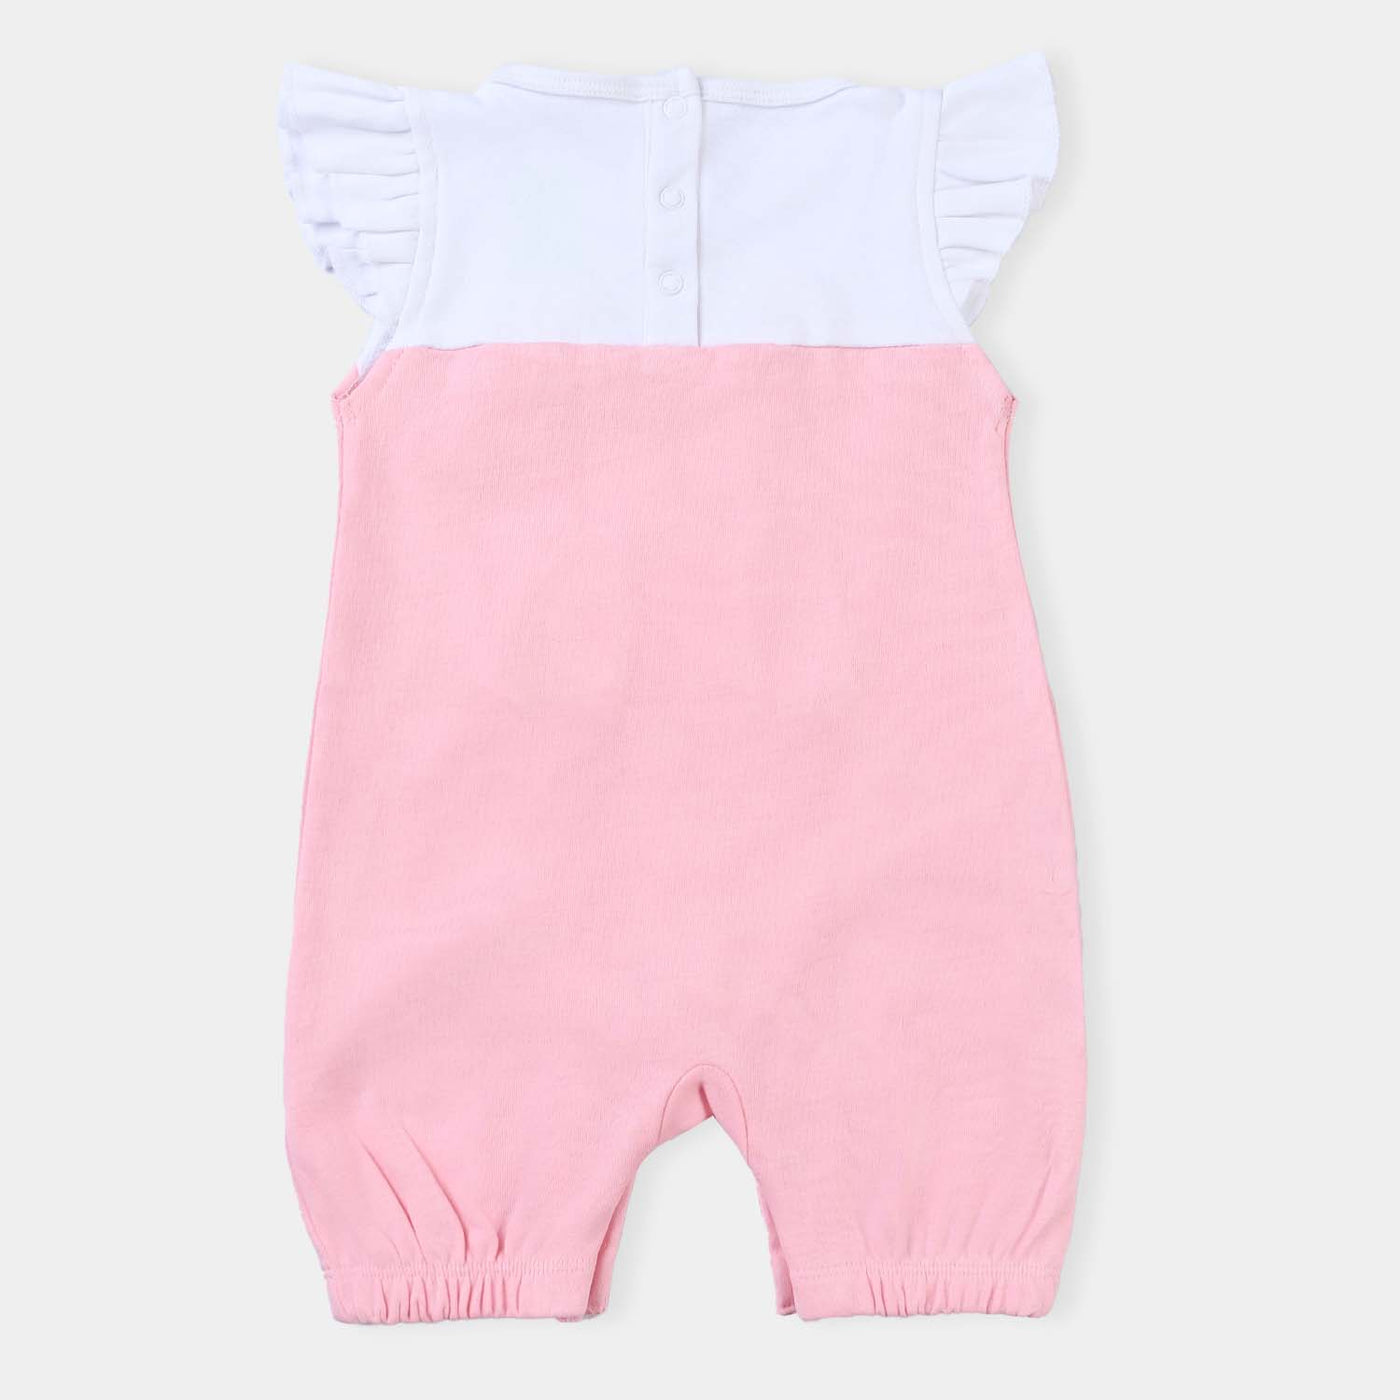 Infant Girls Cotton Interlock Knitted Romper Peek A Boo-White